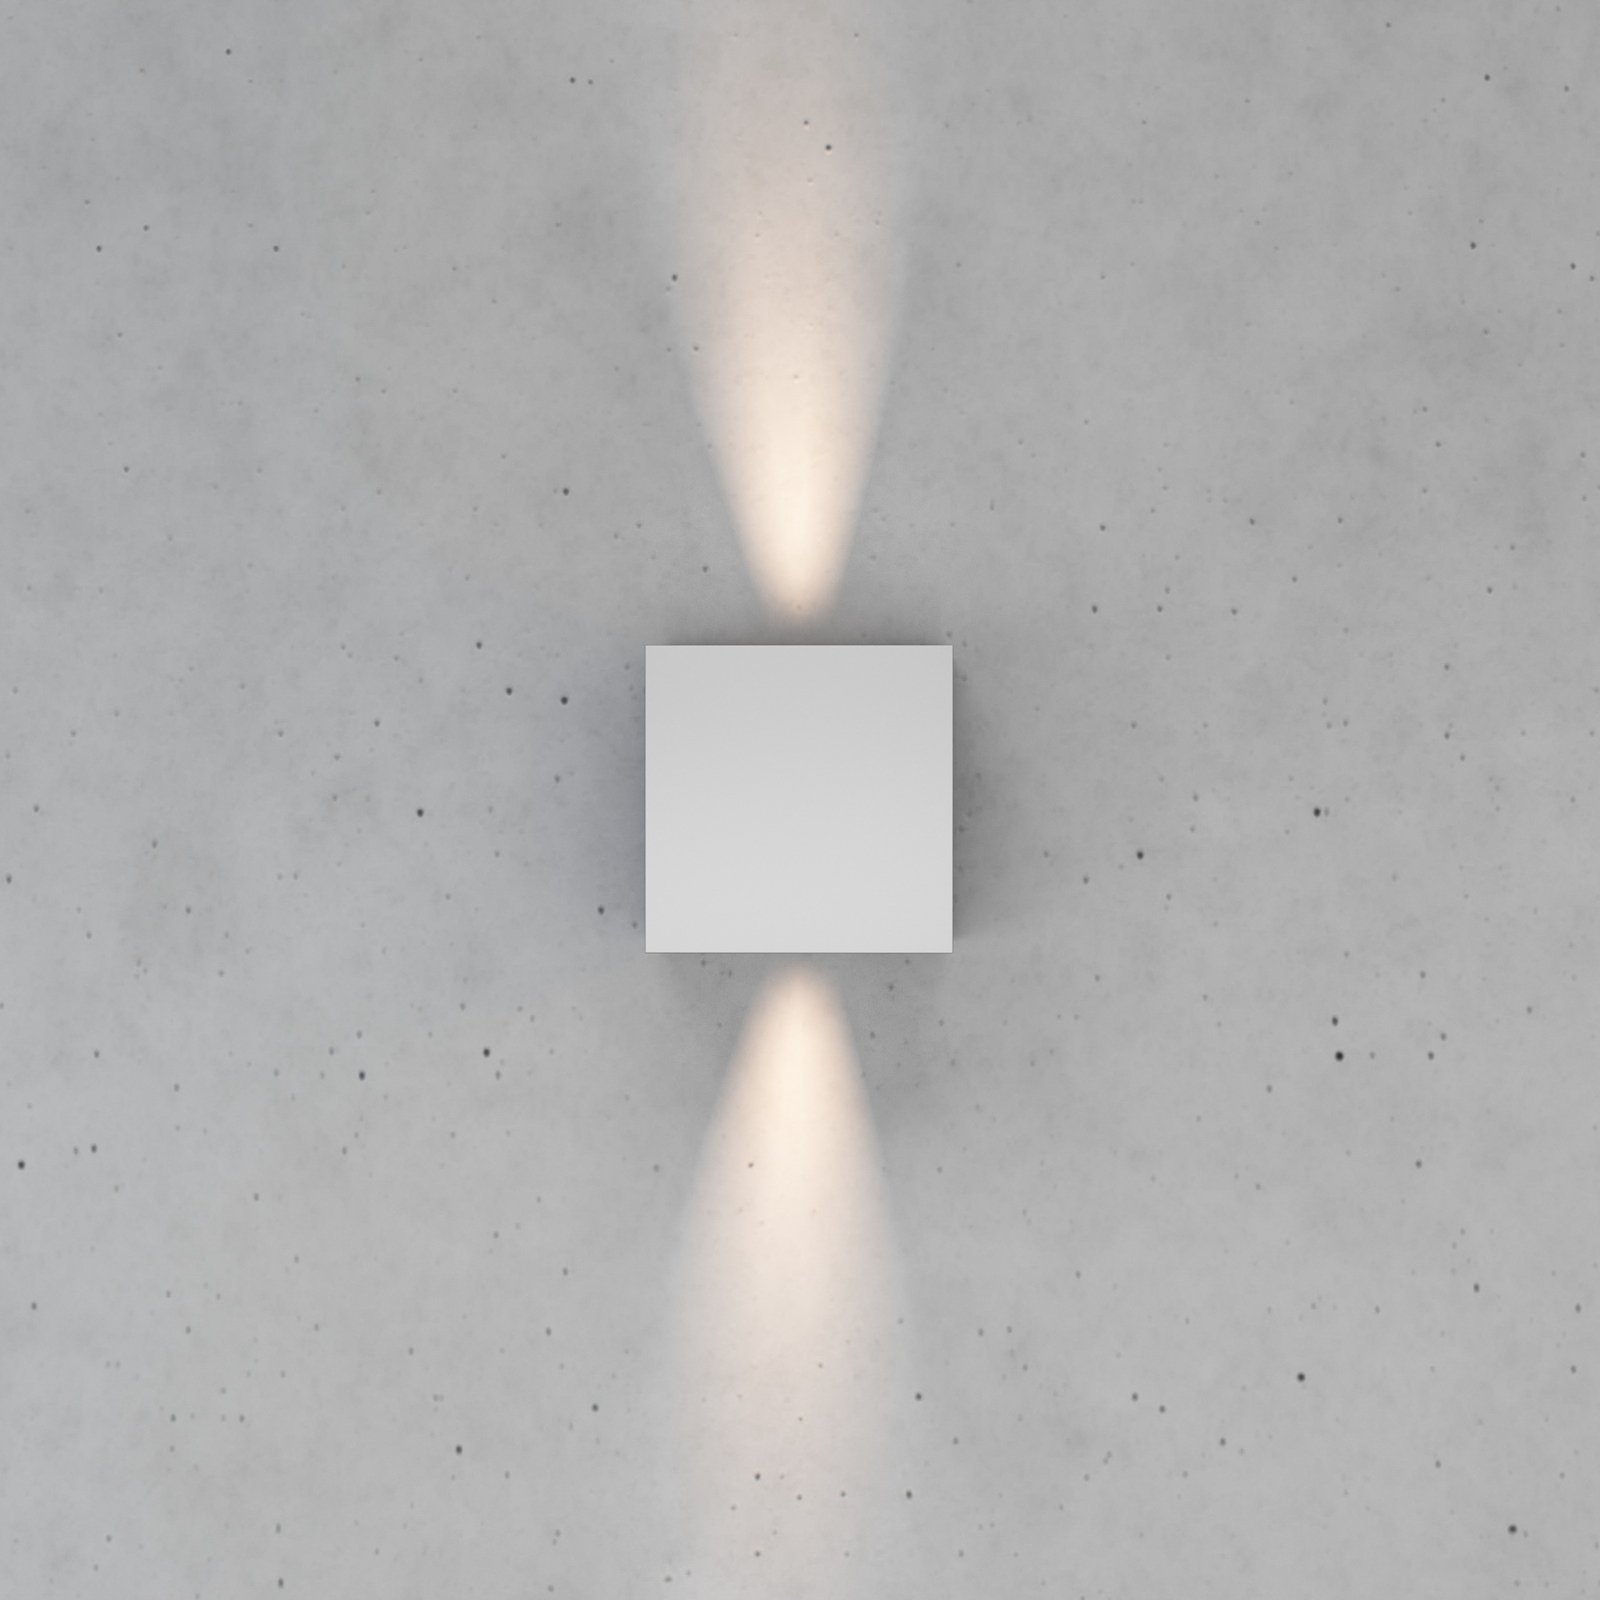 Zidna lampa Zuza 2, boja aluminija, metal, četiri lamela, 10 cm, G9